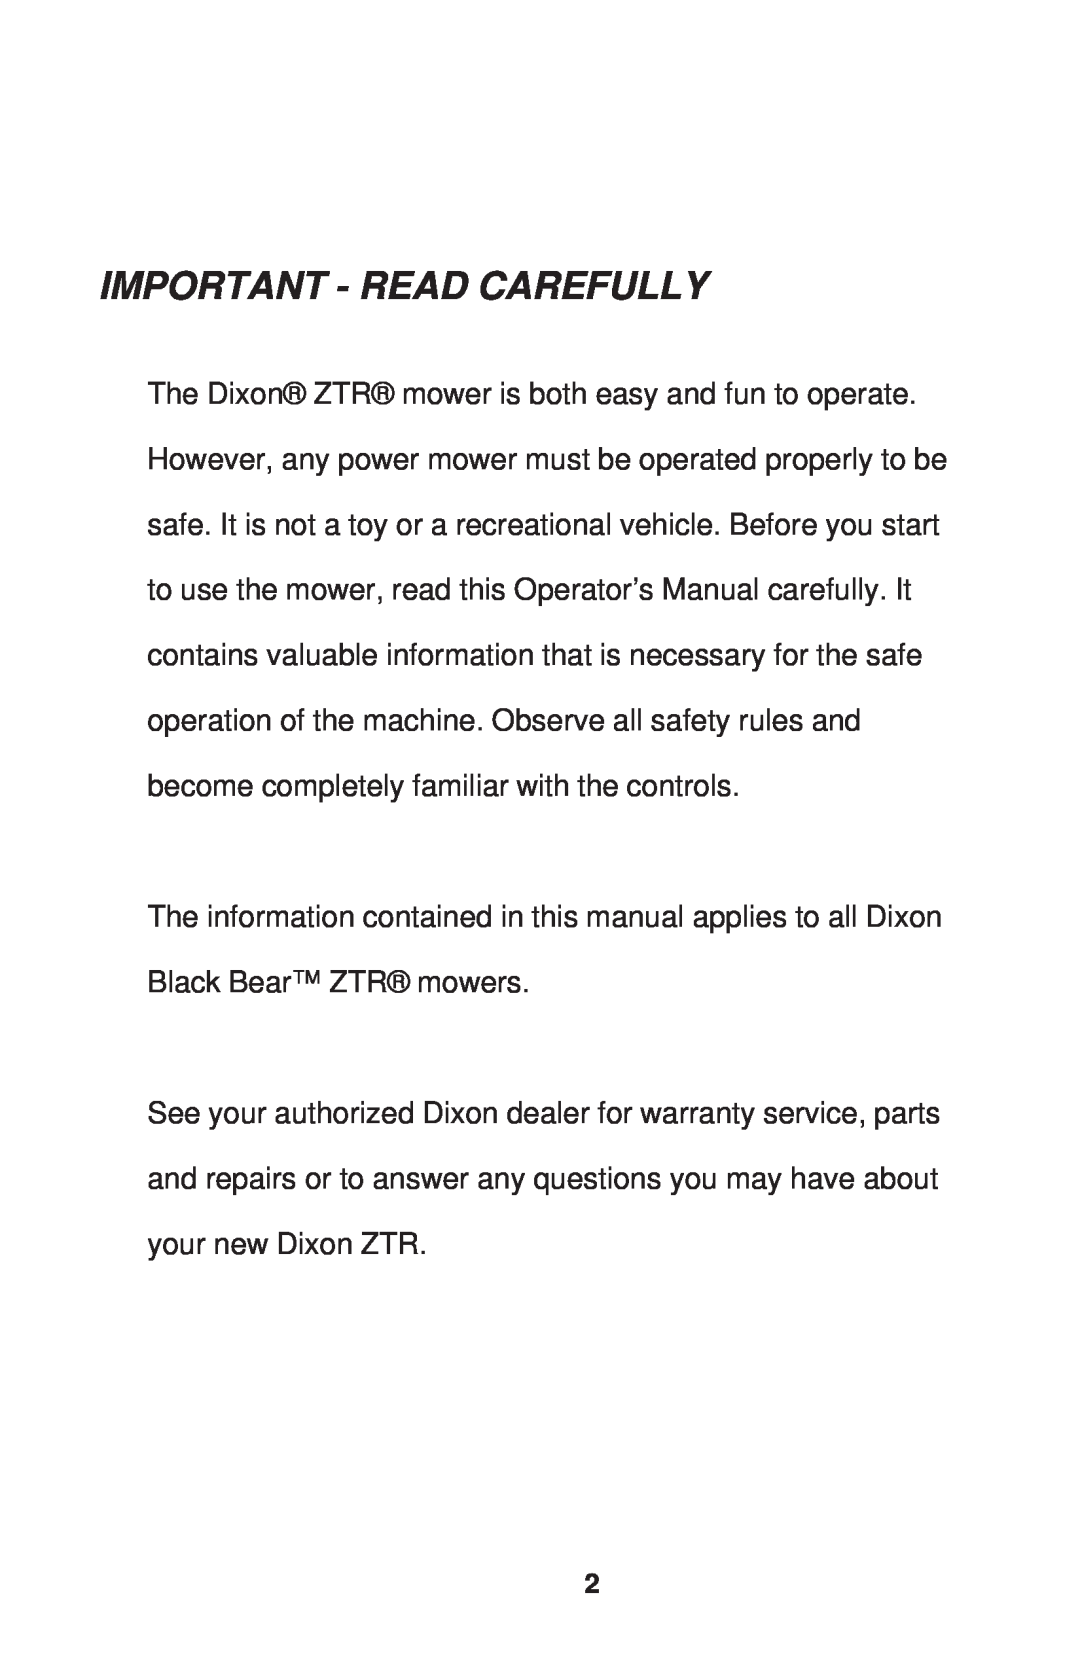 Dixon ZTR 34, ZTR 44, ZTR 34 manual Important - Read Carefully 